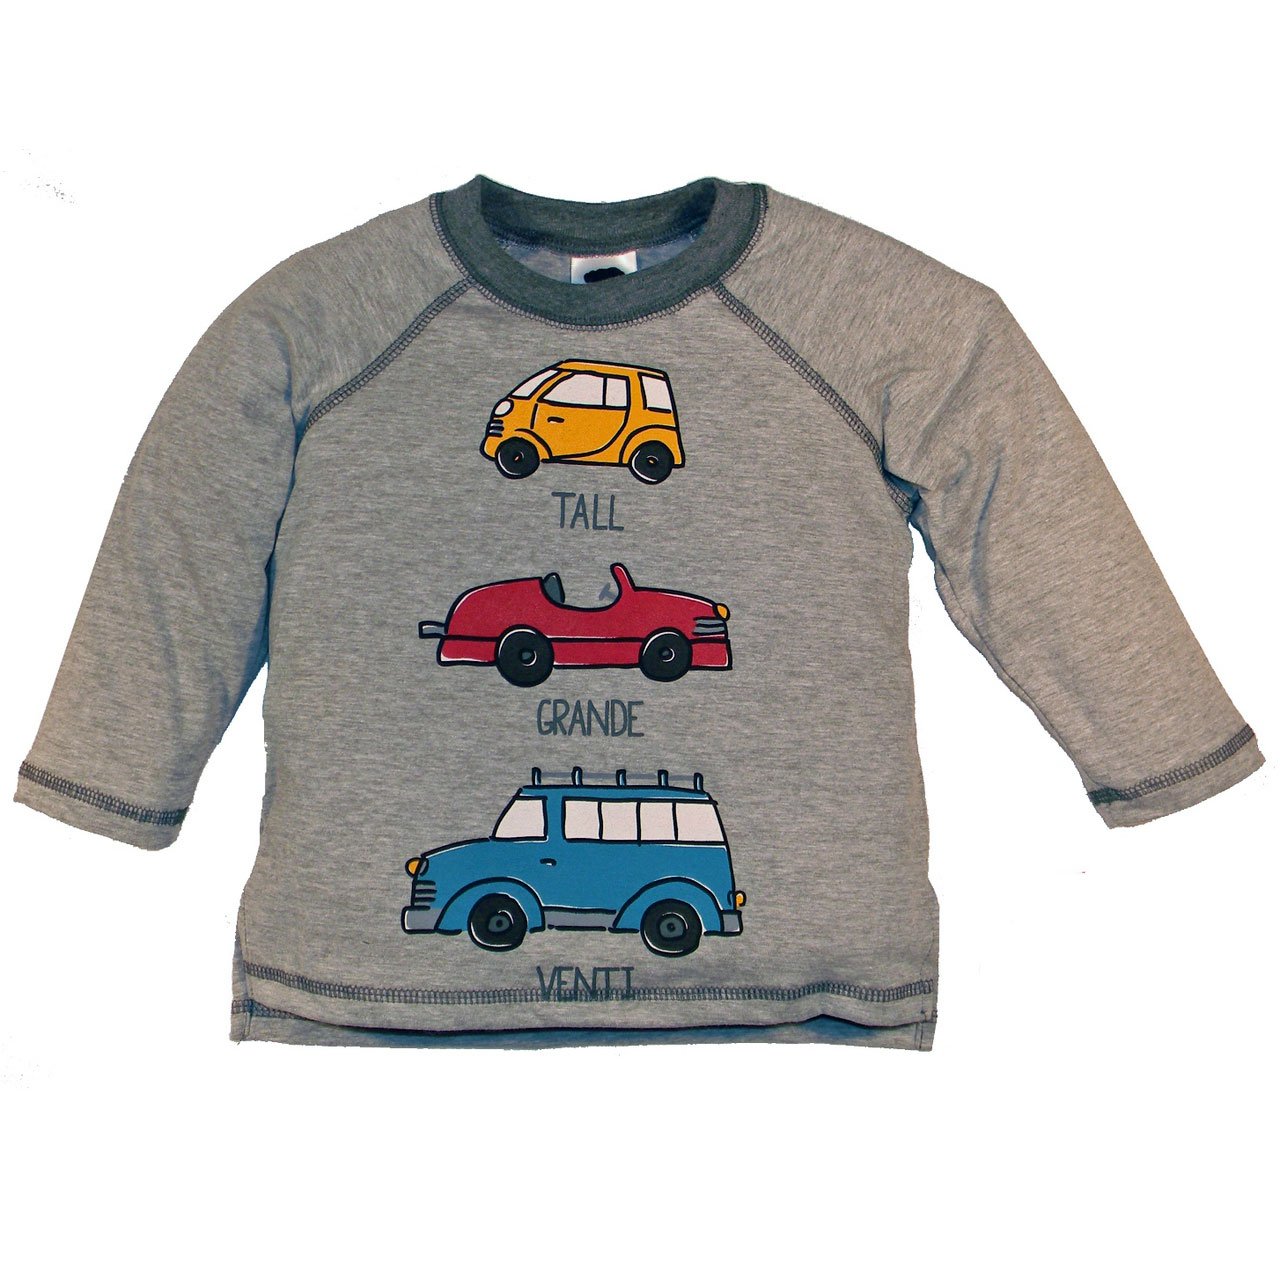 Boys' Tall, Grande, Venti Car Shirt by Mulberribush - The Boy's Store